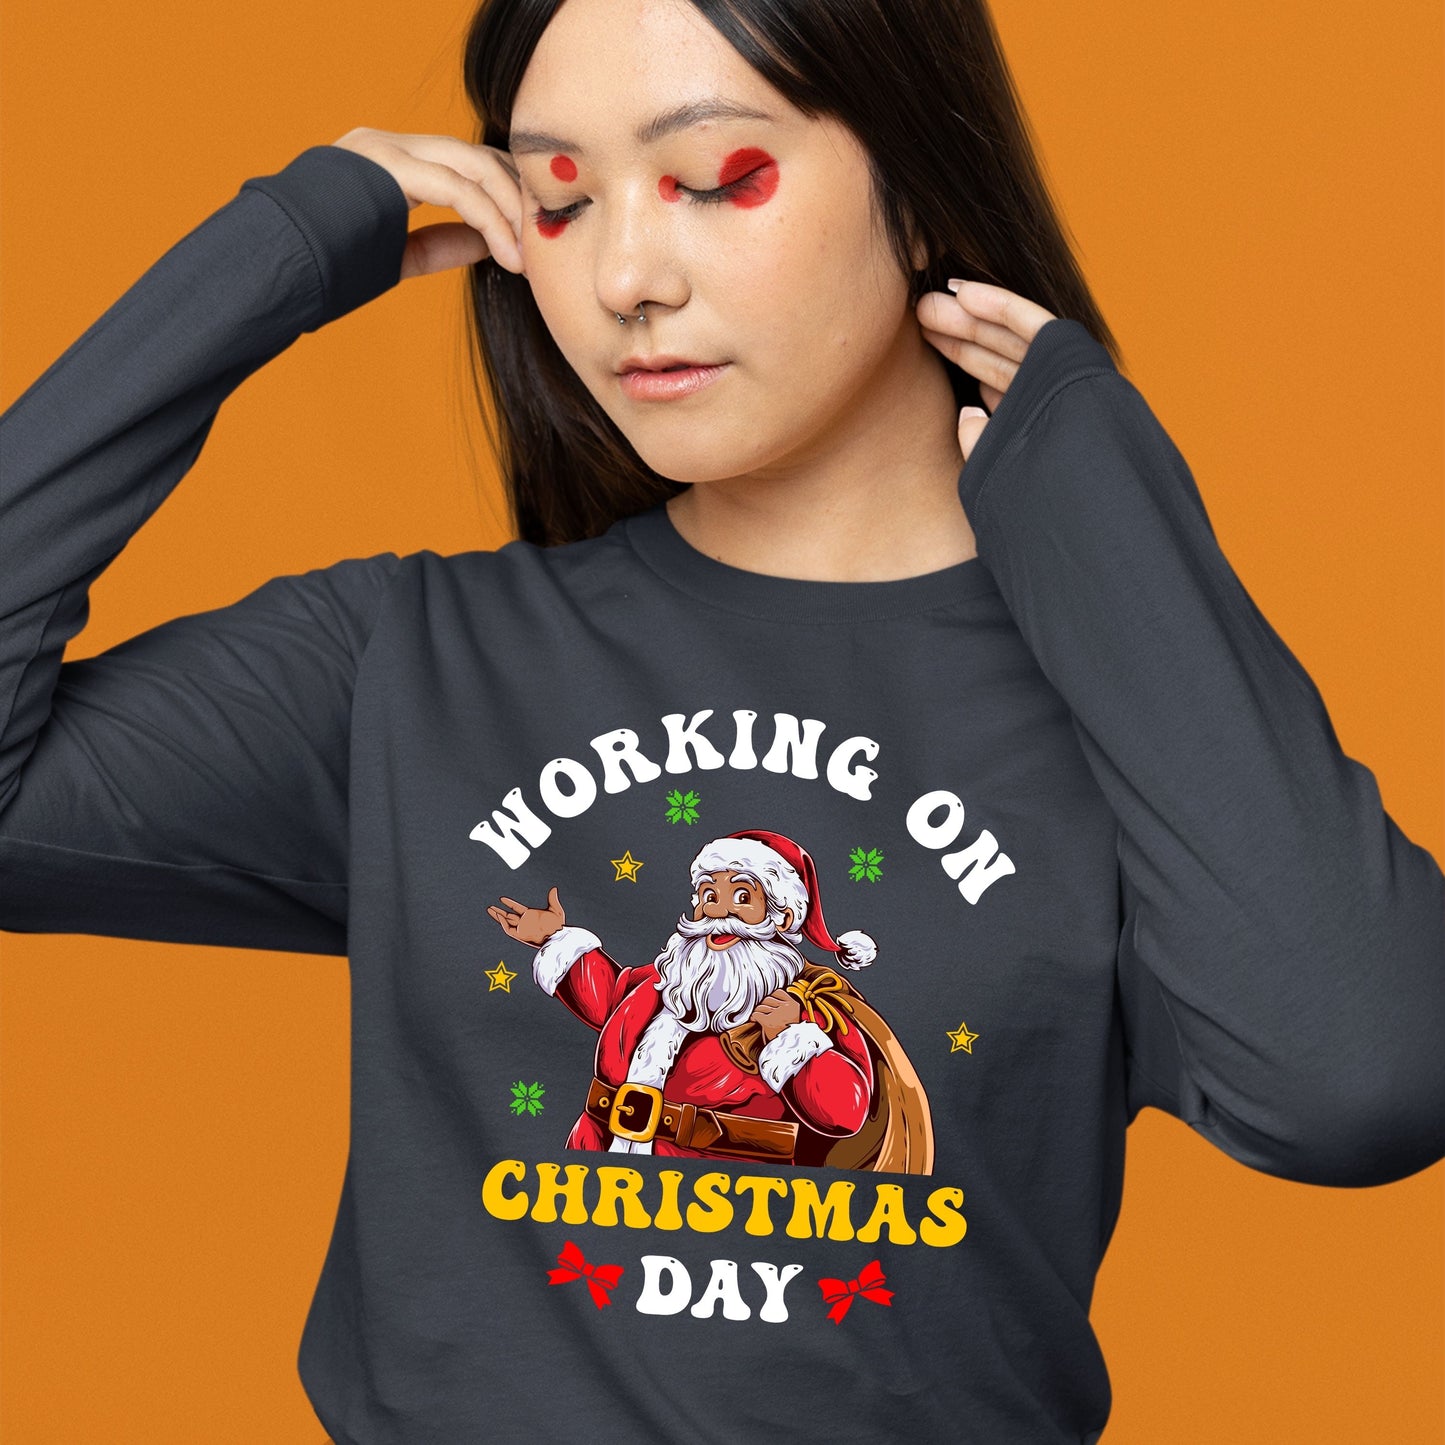 Working on Chirstmas, Women Long Sleeves, Christmas Clothing, Christmas Sweatshirts, Christmas Shirts, Christmas Decor, Christmas